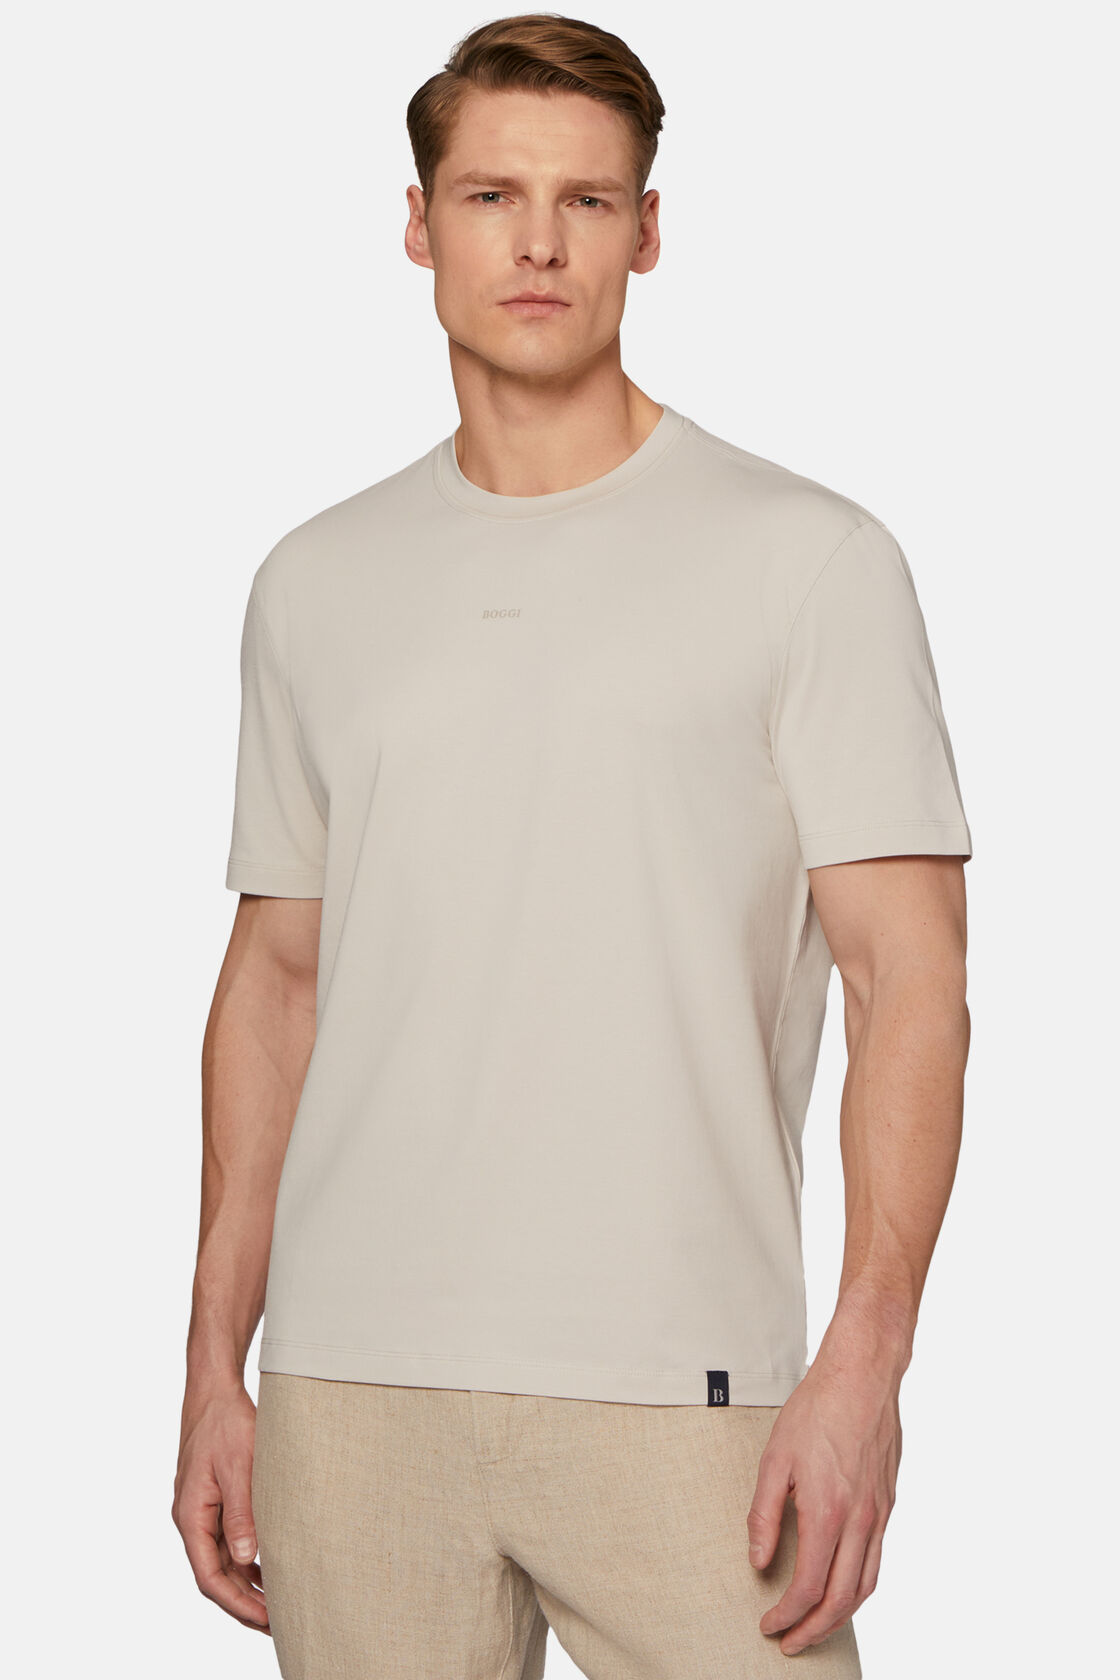 T-shirt En Coton Supima Extensible, Sable, hi-res